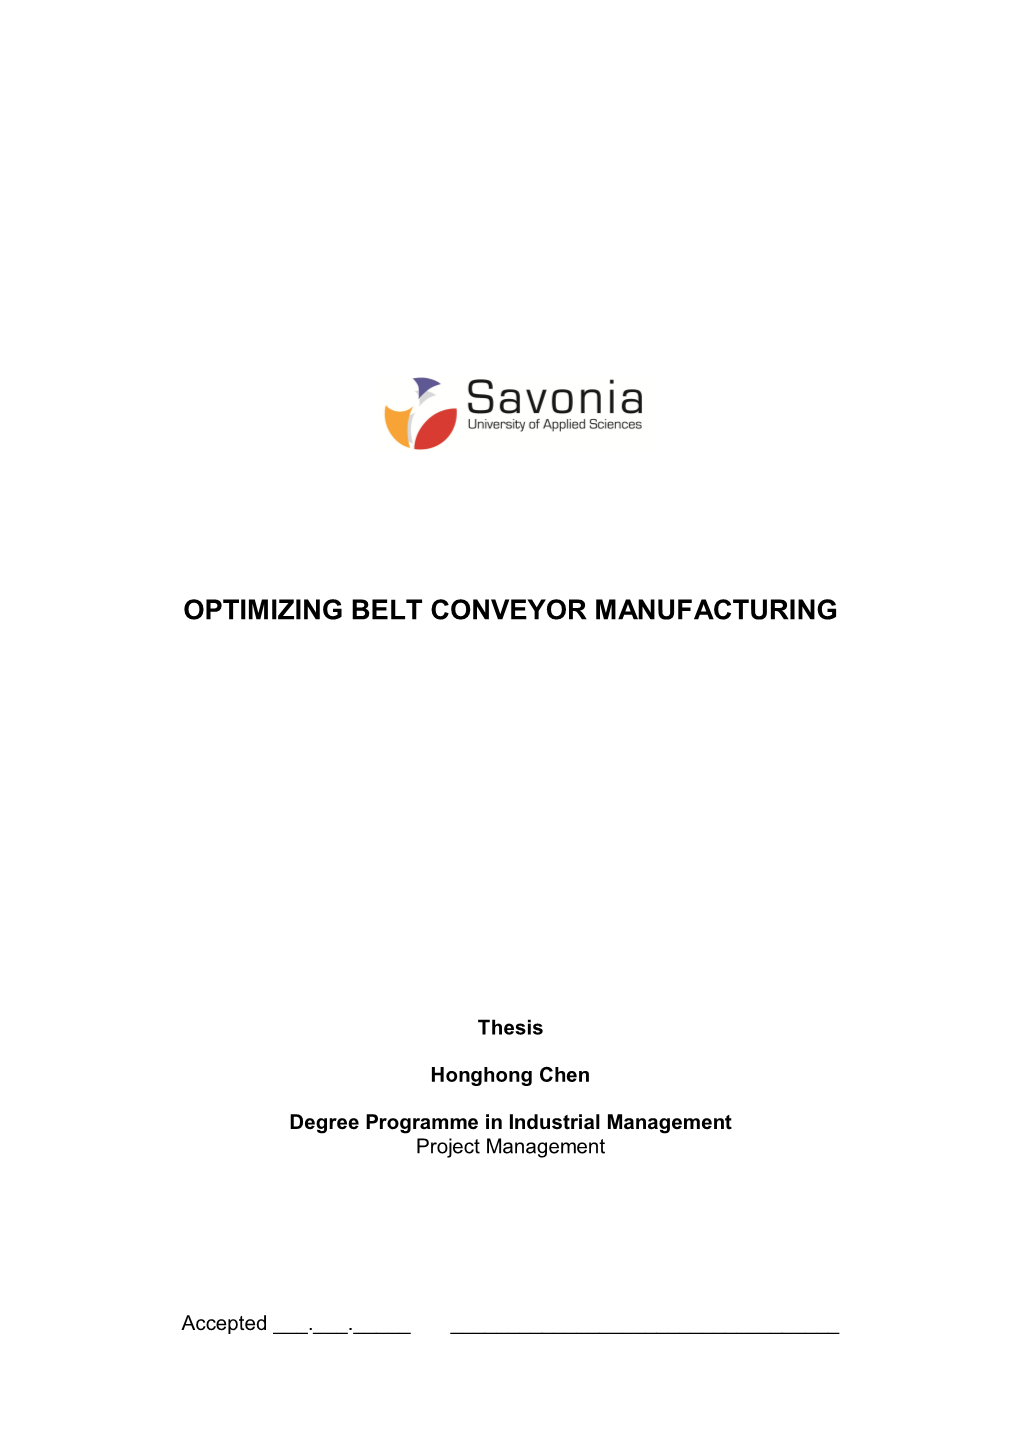 Optimizing Belt Conveyor Manufacturing